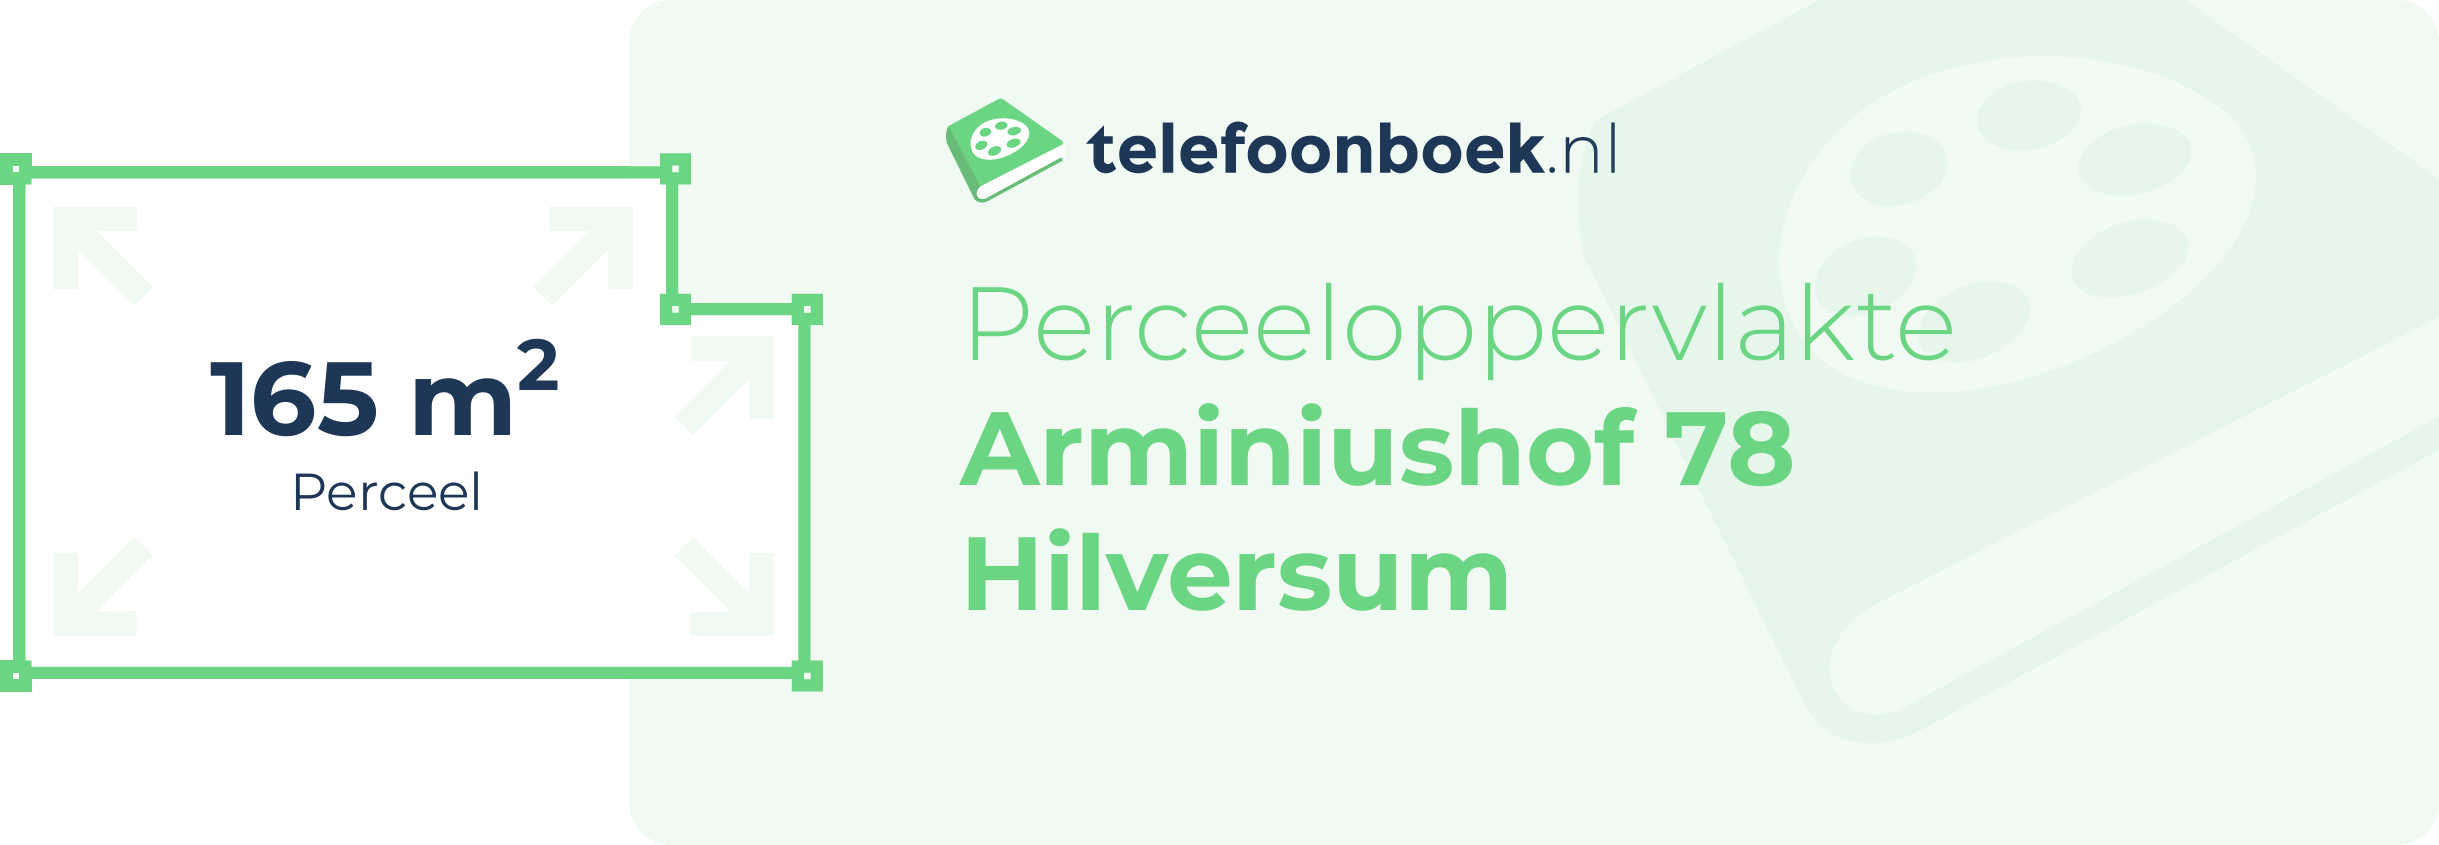 Perceeloppervlakte Arminiushof 78 Hilversum